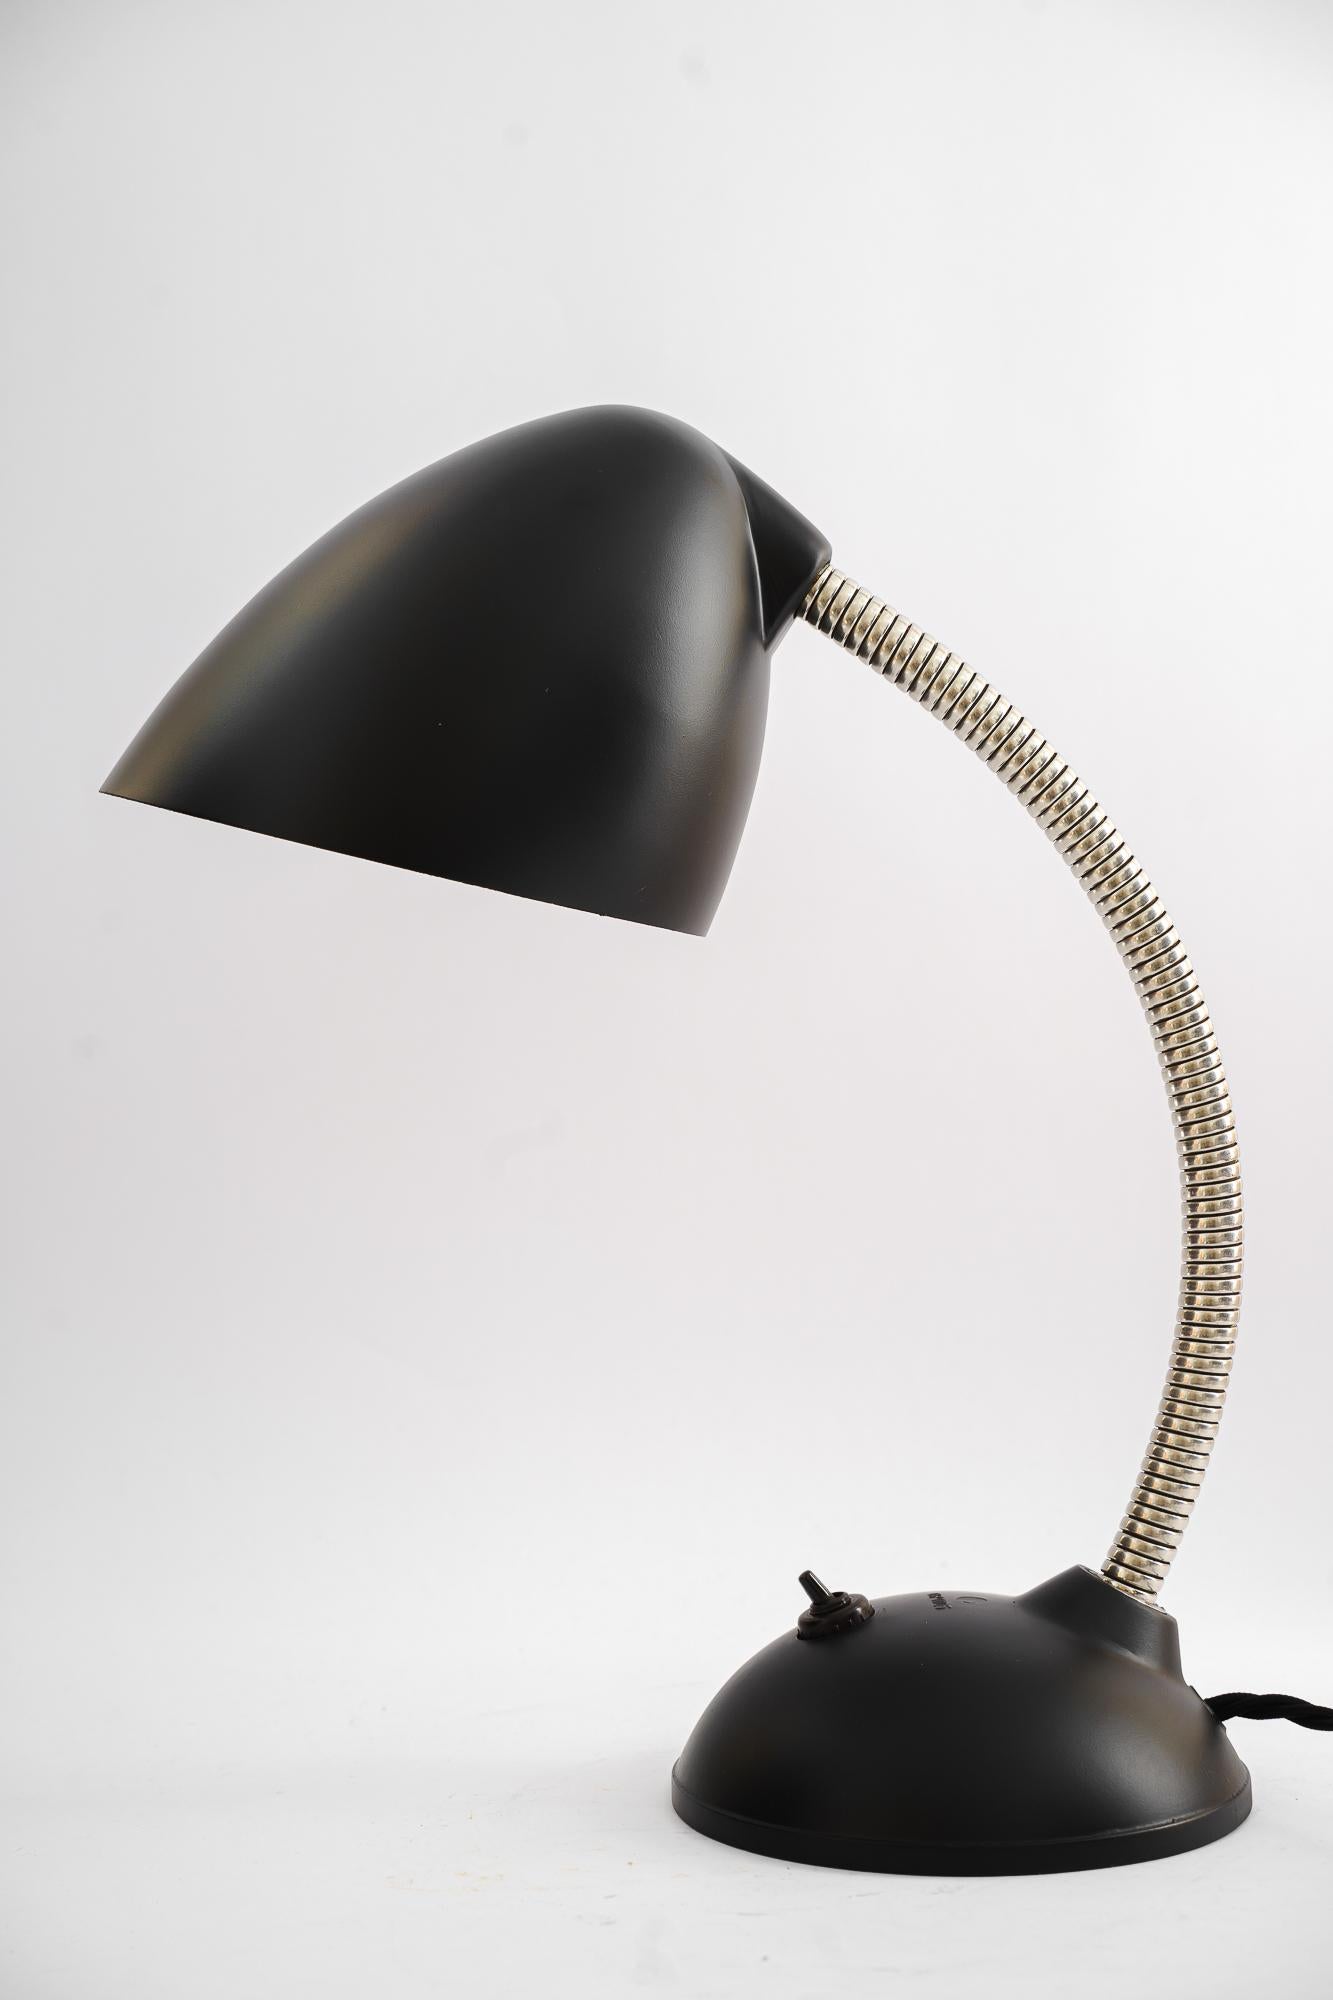 Adjustable bakelite table lamp, Germany, around 1940s.
Blackened.
Nickel plated.